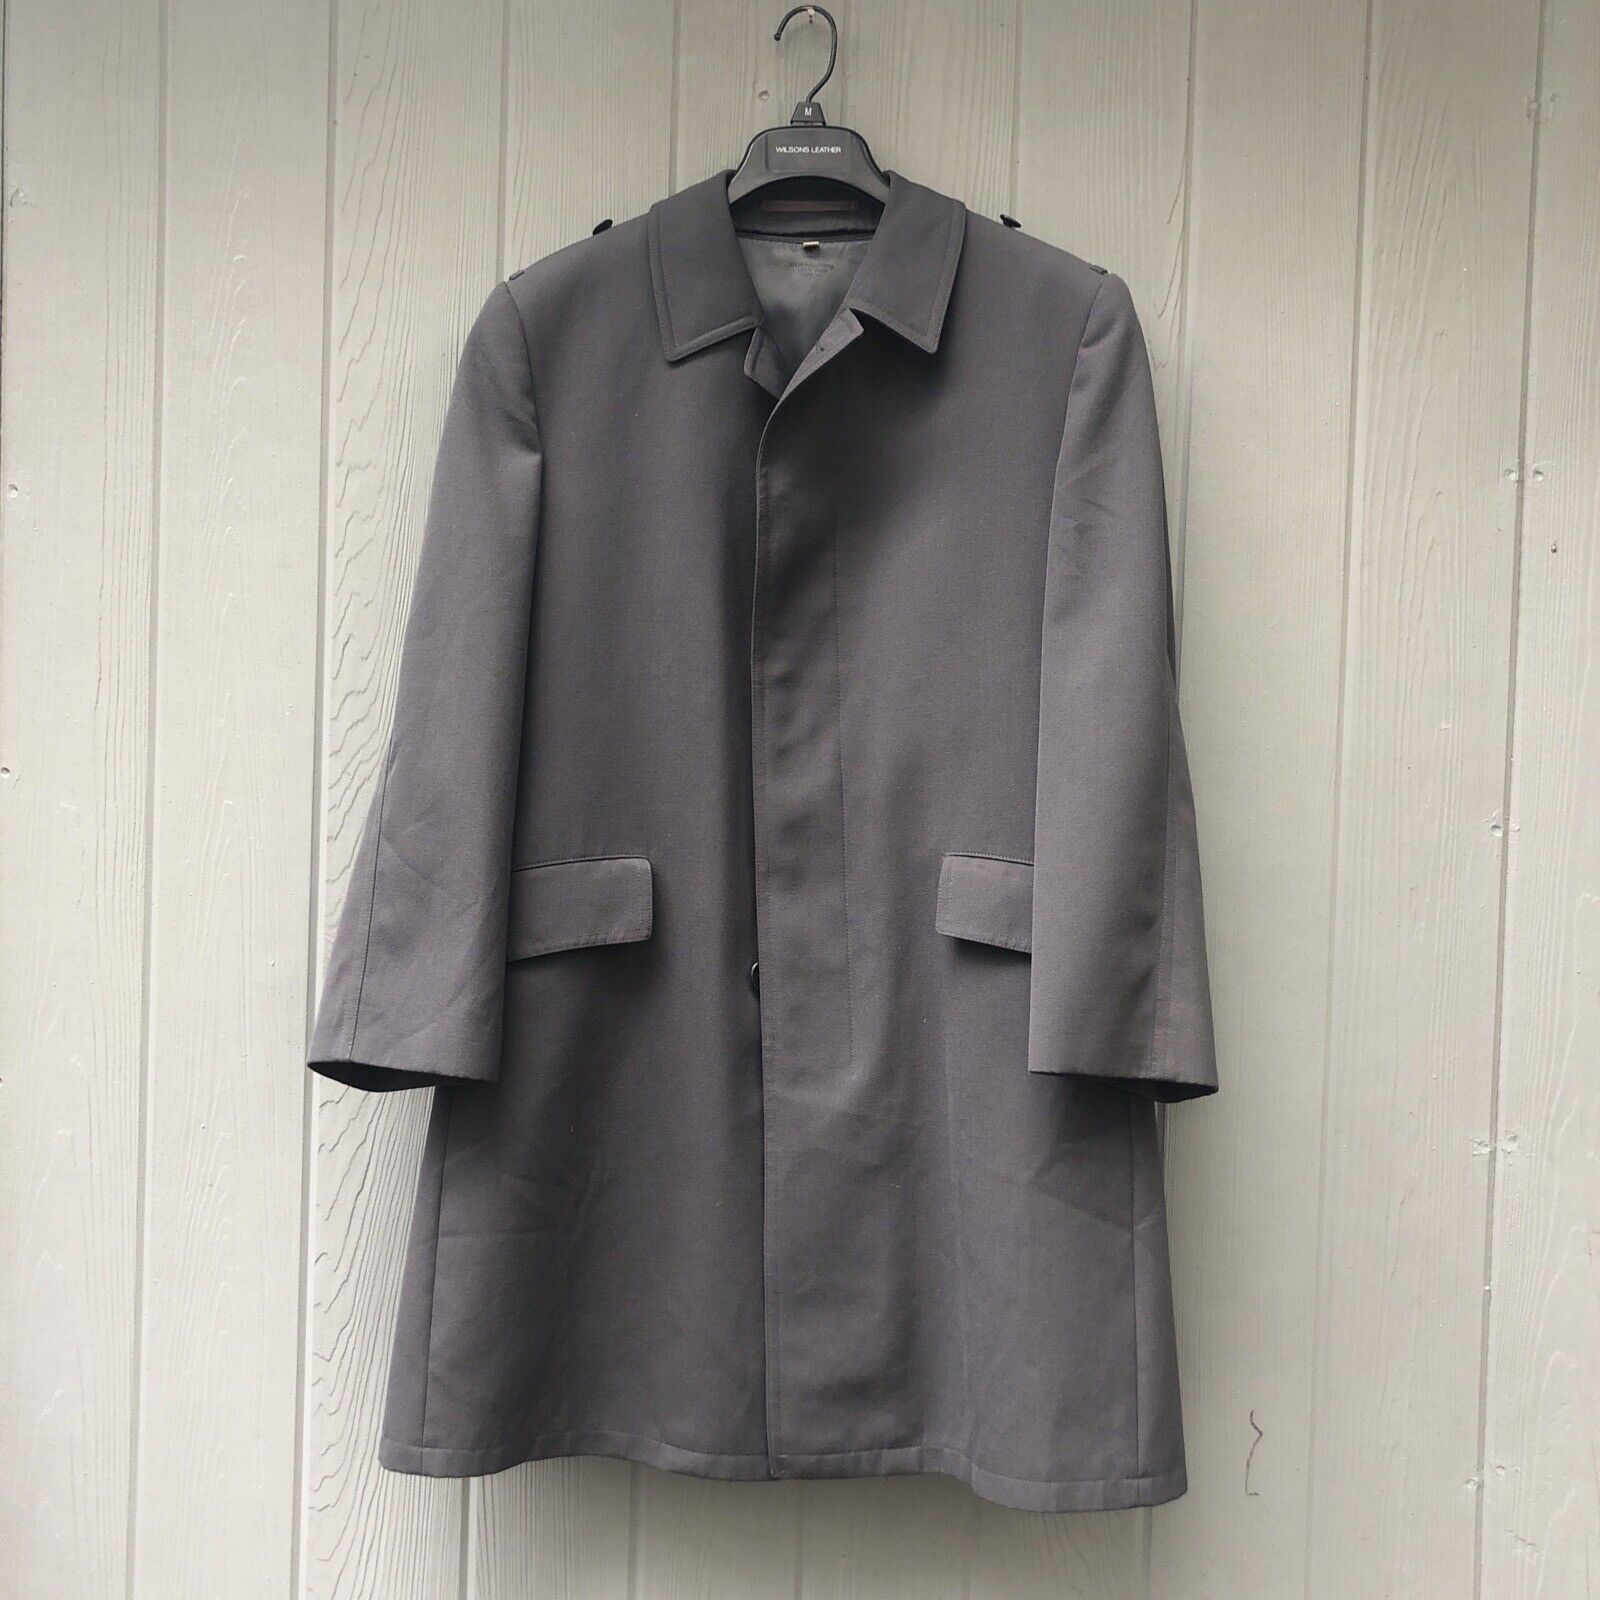 Vintage Schwarz Passau German  Overcoat Jacket Removable Liner Army Gray Size LG